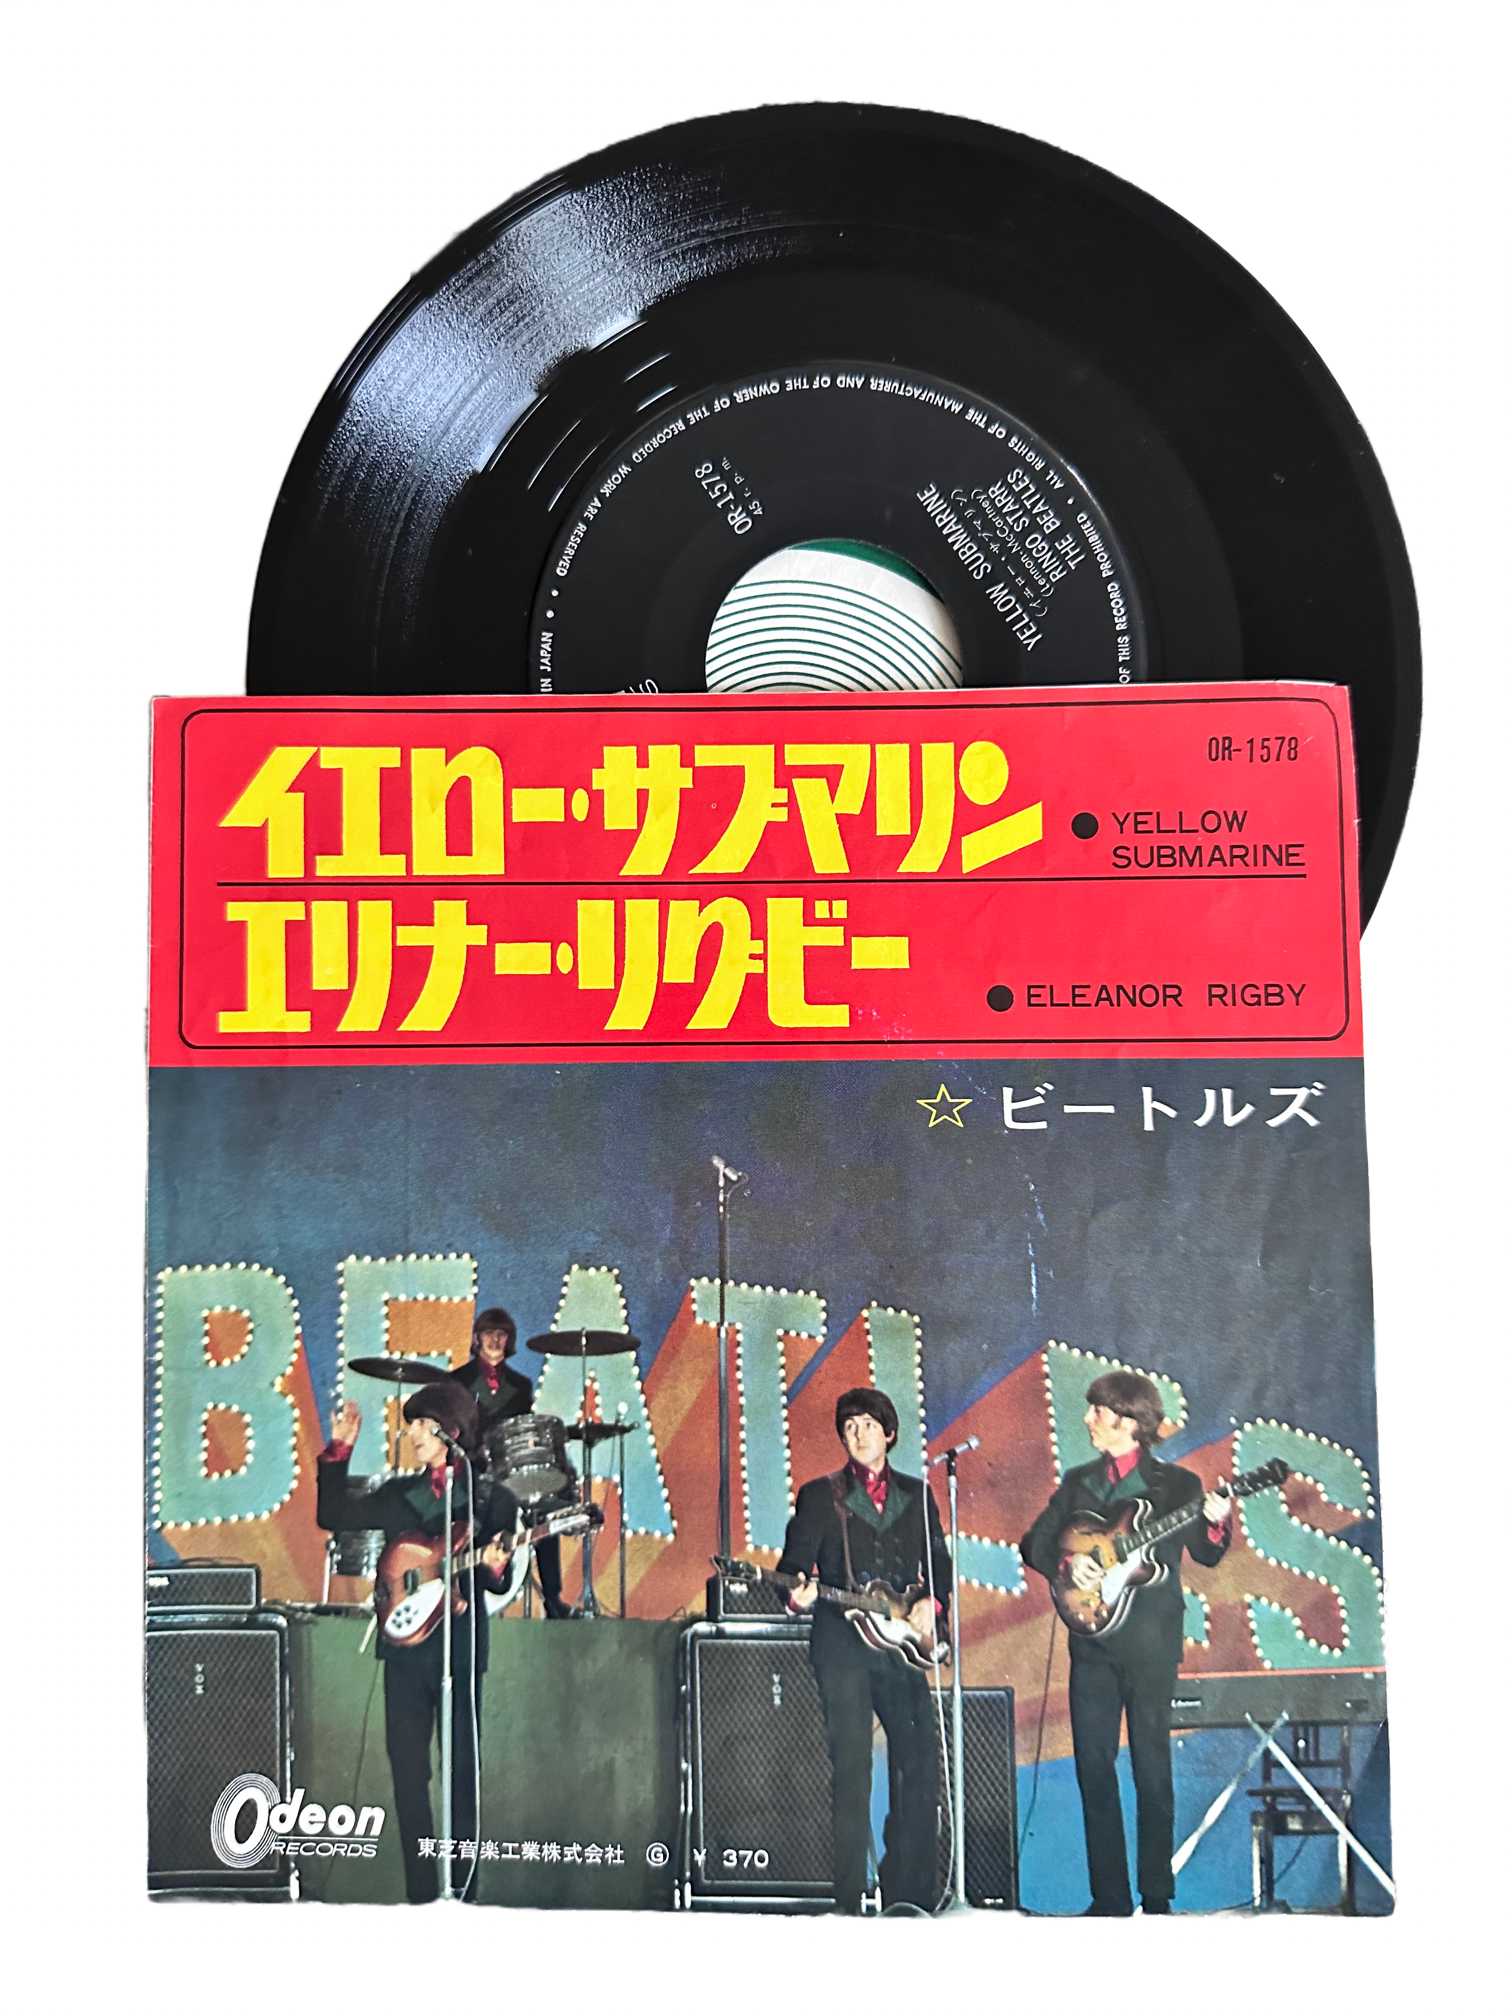 Yellow Submarine / Eleanor Rigby [Japanese 7 Vinyl Single]